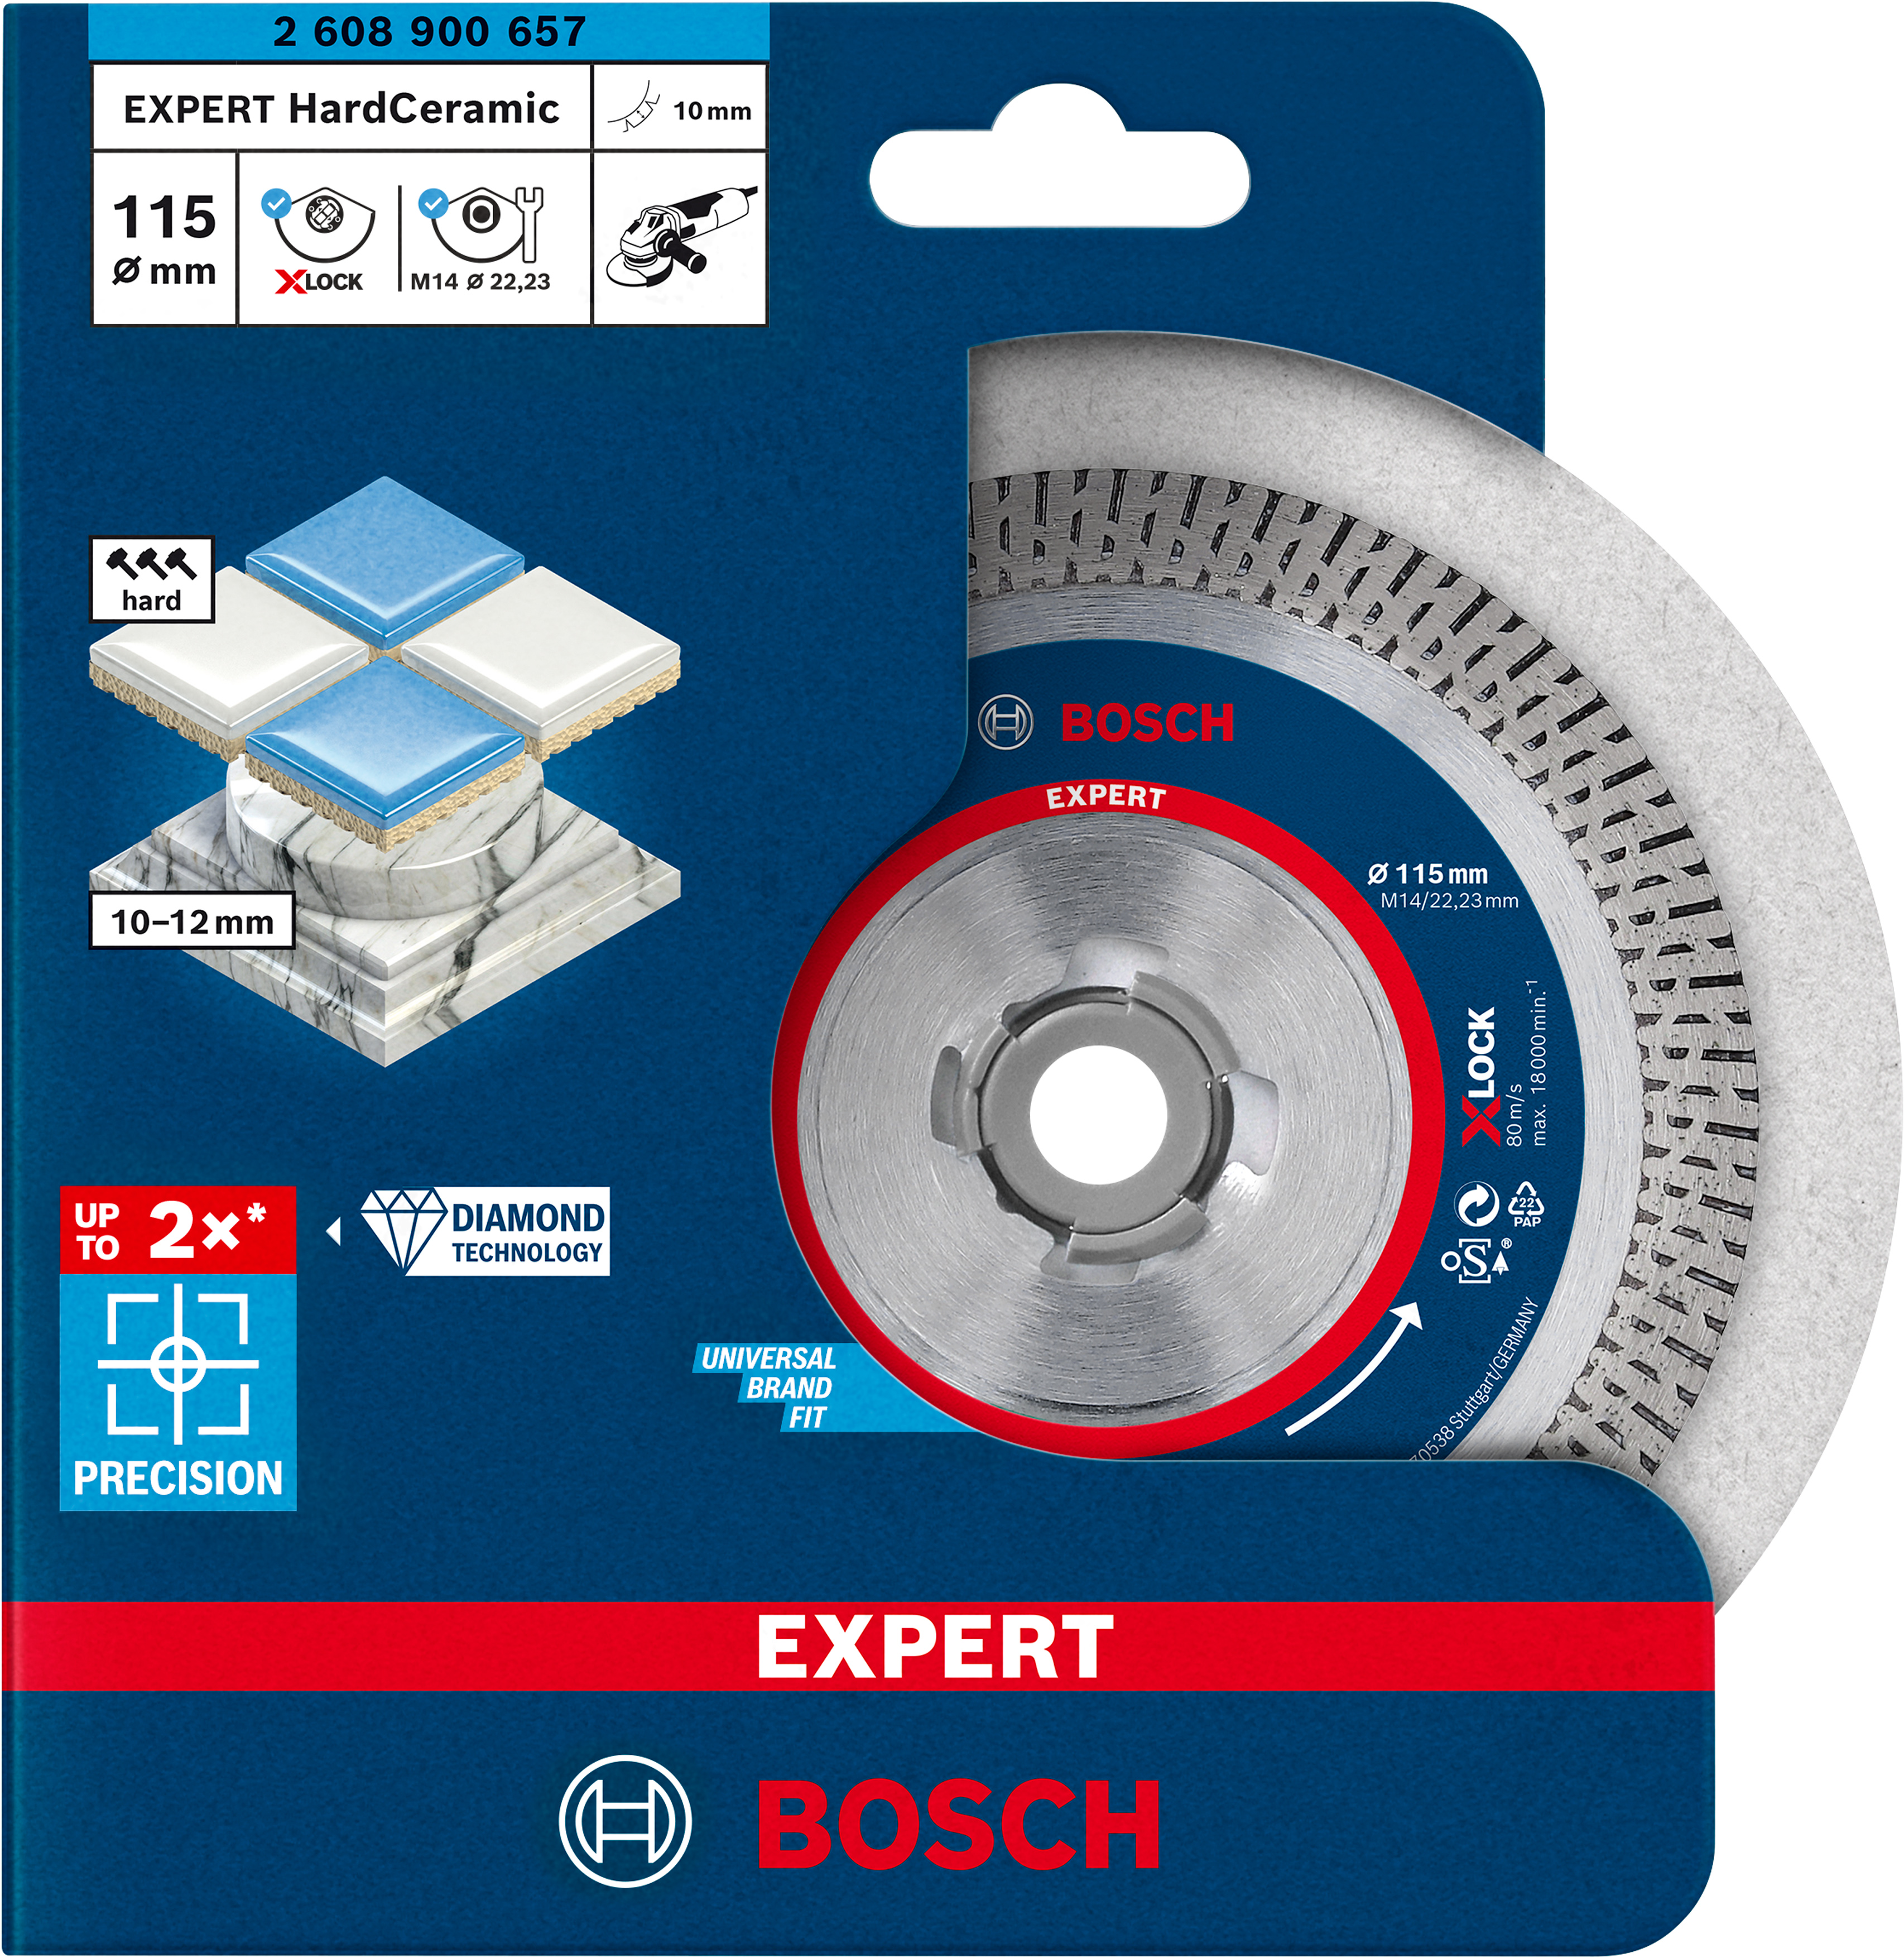 Bosch 115mm X-LOCK Expert HardCeramic Diamond Grinder Cutting Disc